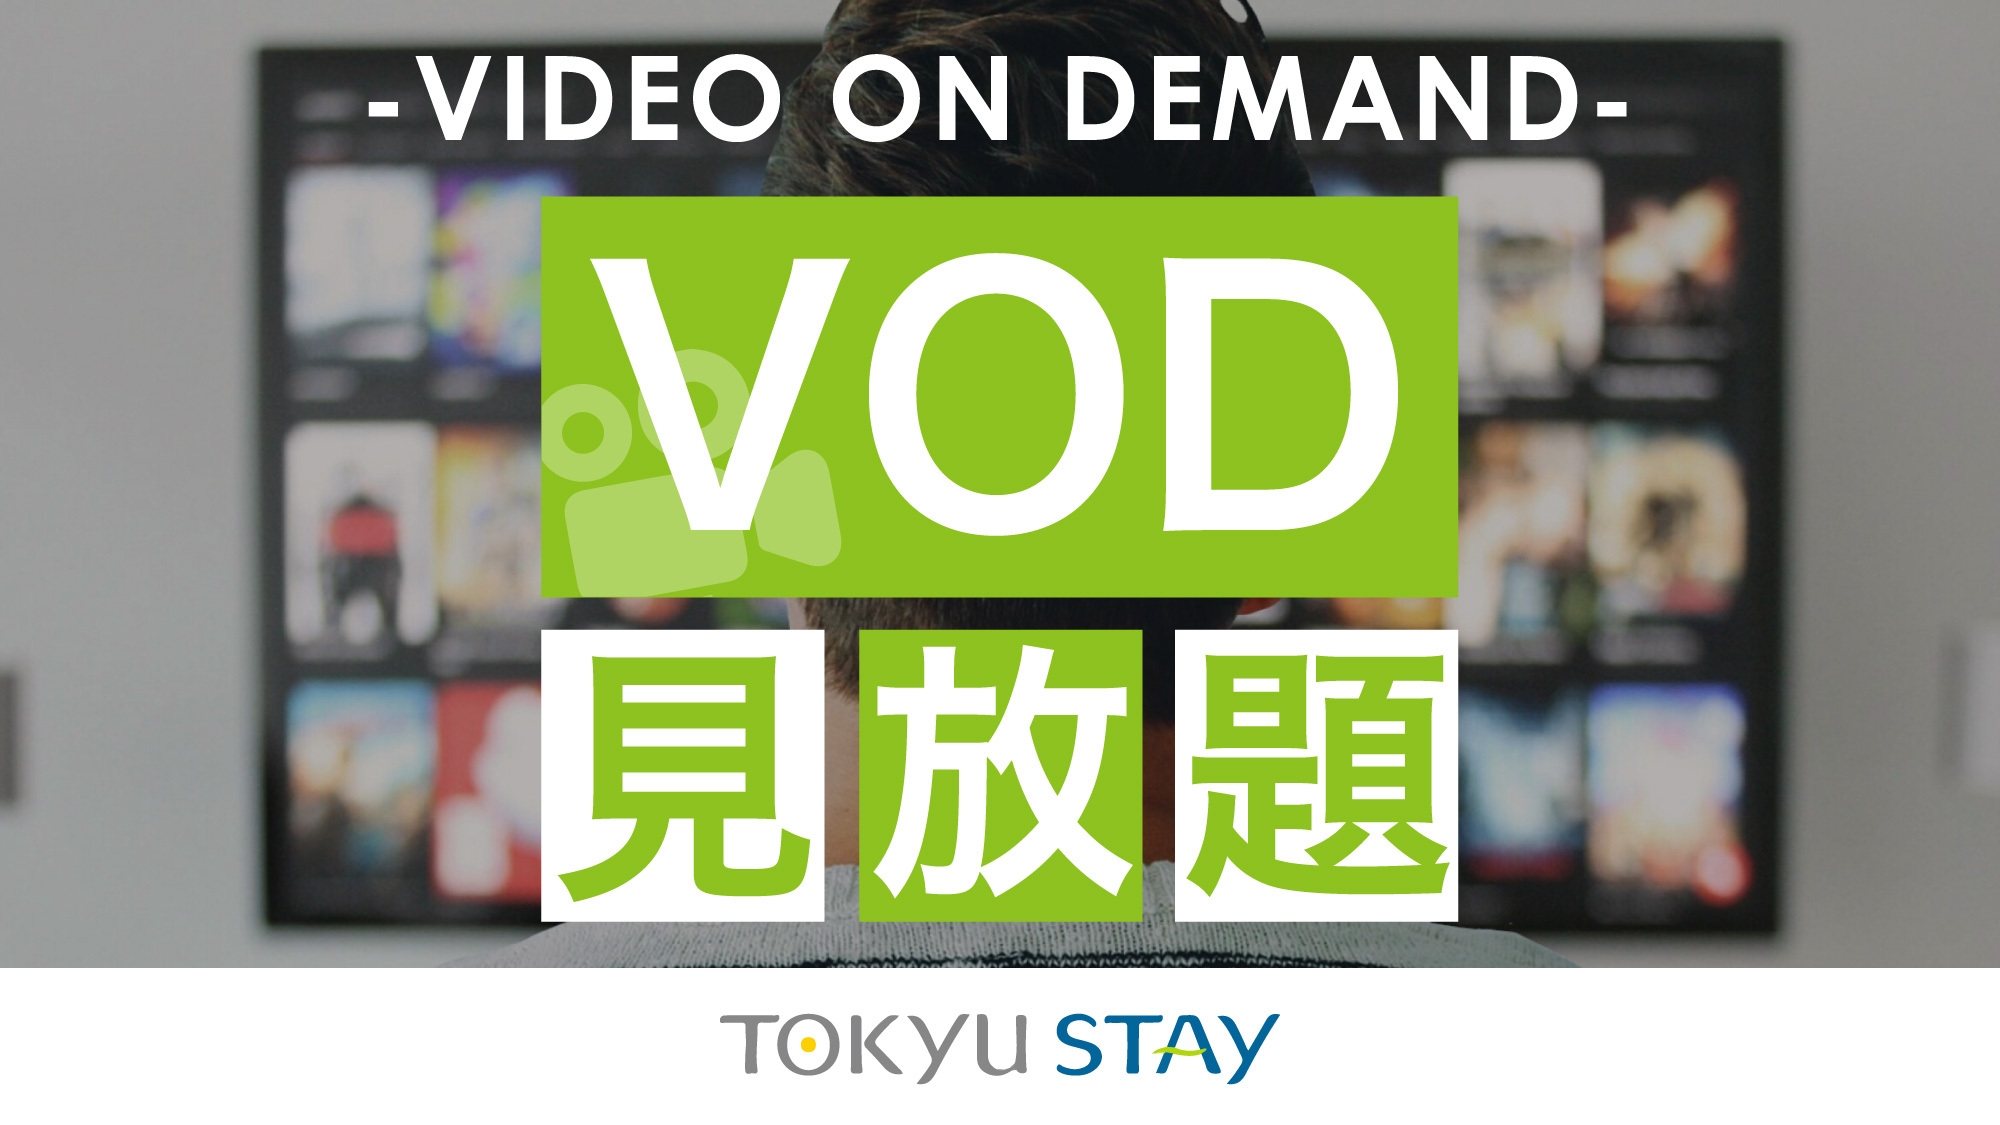 【VOD+12時レイトチェックアウト】カップル・ご夫婦・二人旅にもおすすめ【2名】（素泊）